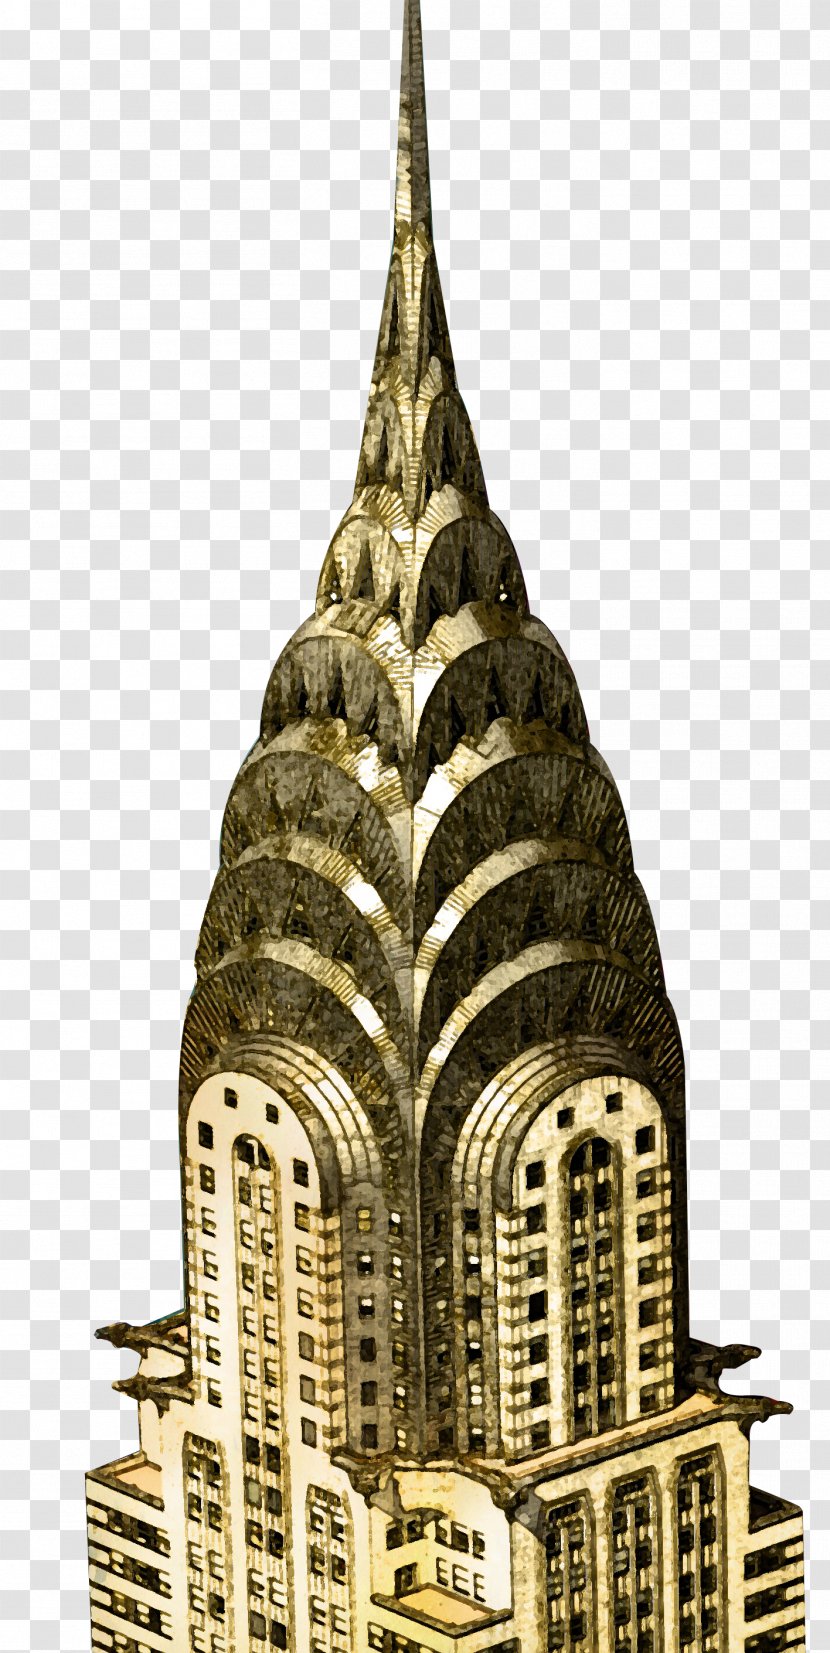 Empire State Building Architecture Clip Art - Steeple - Picture Elements Transparent PNG